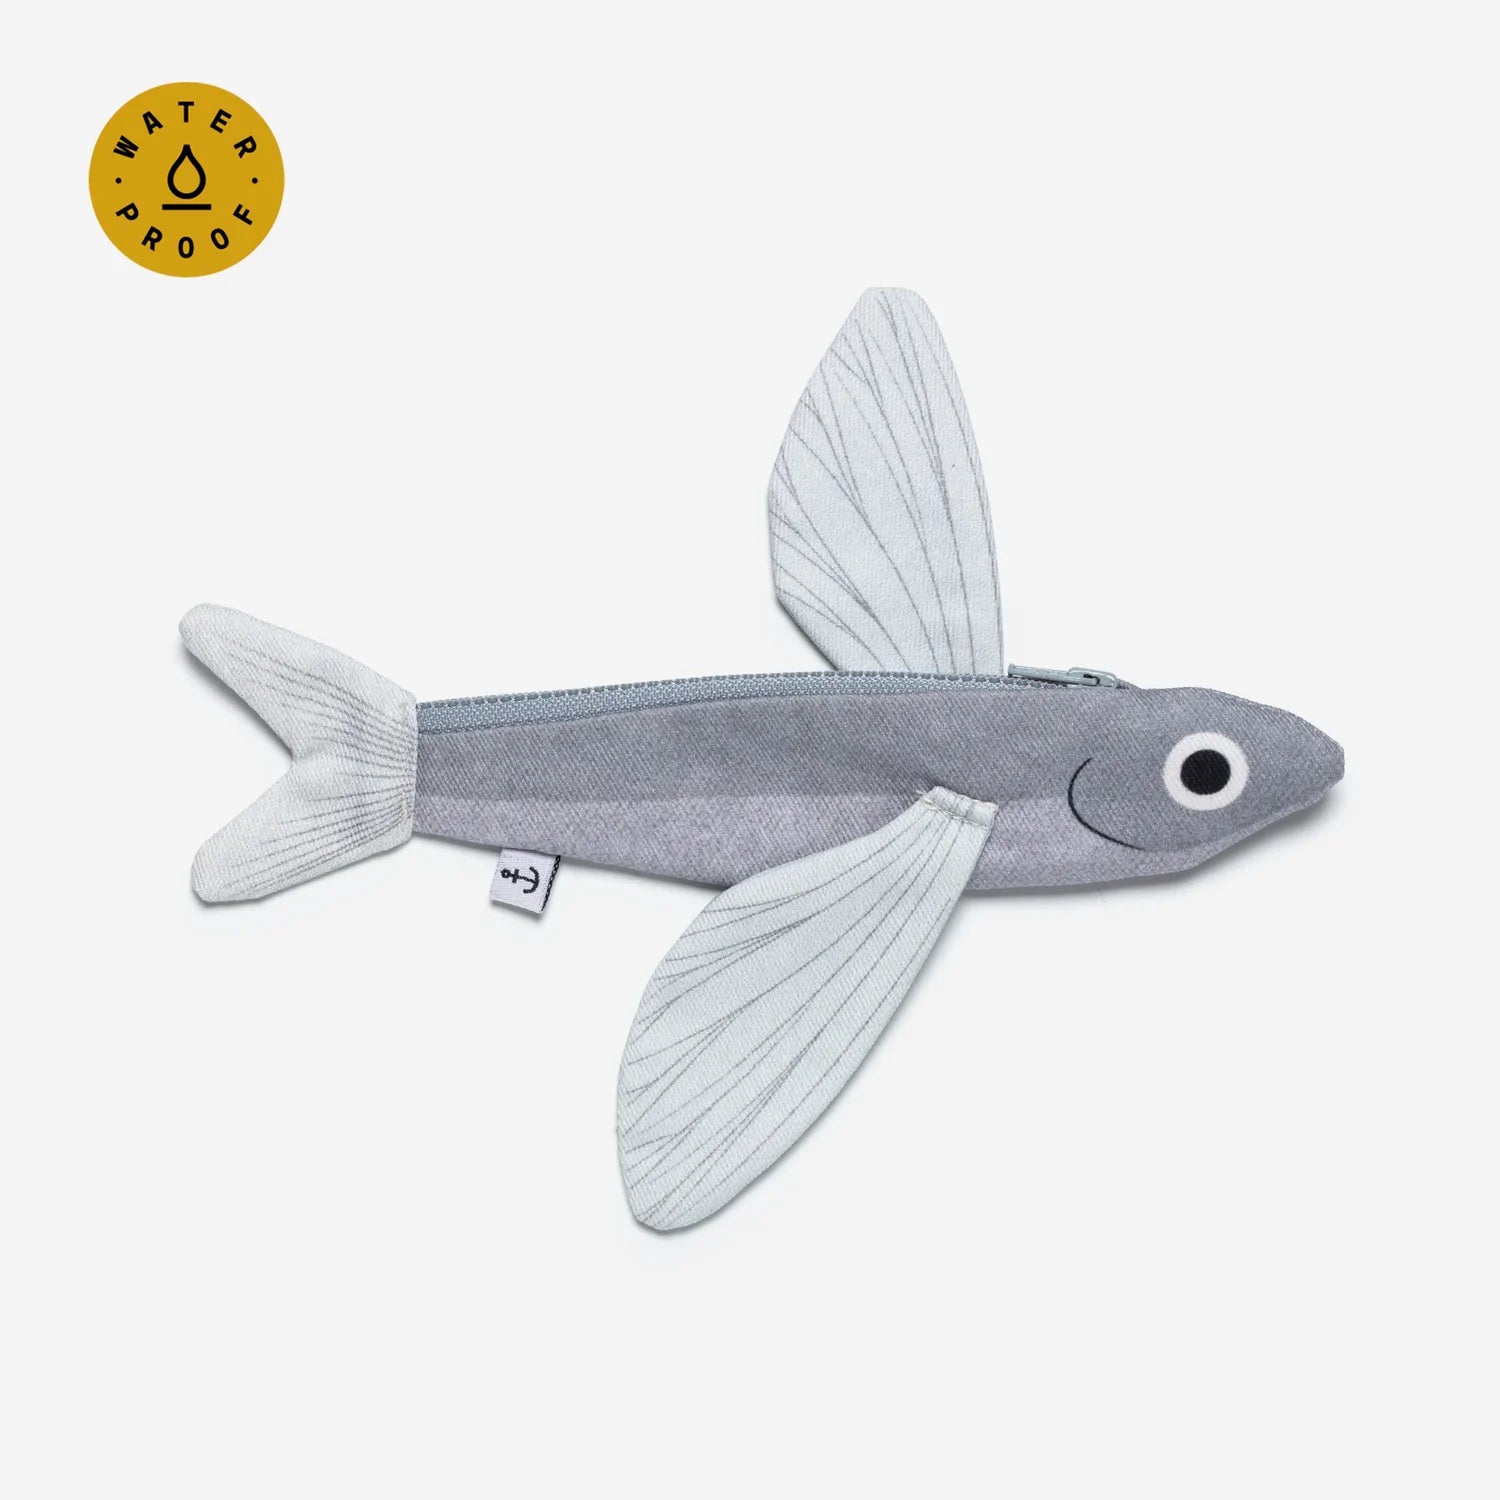 Flying Fish keychain - waterproof